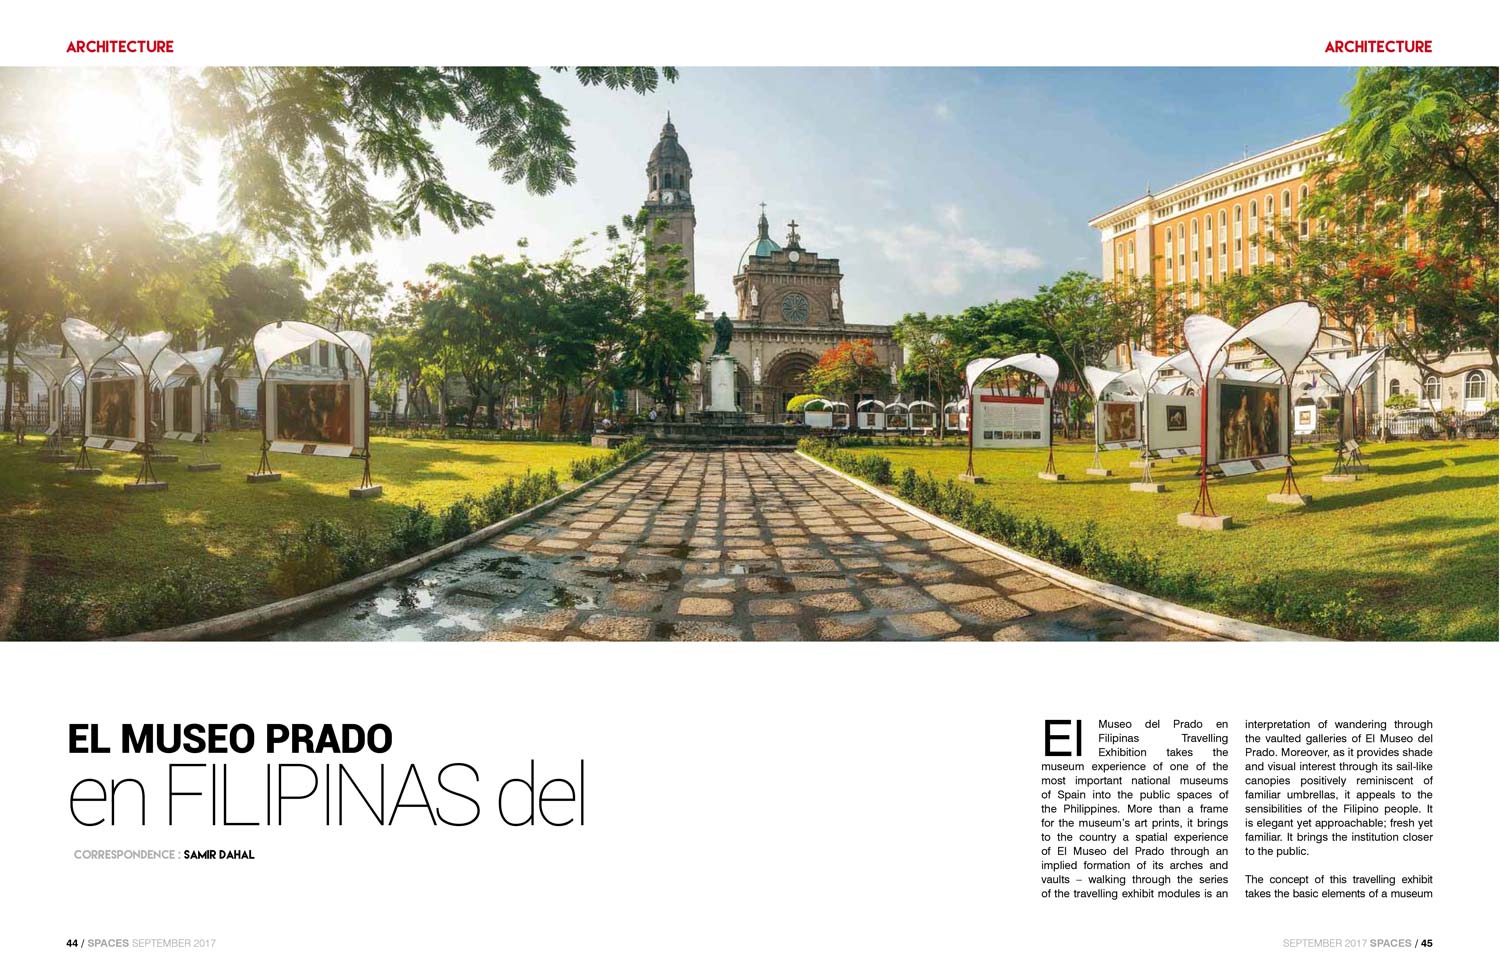 Spaces Magazine Pages of Museo Del Prado Page 45-46